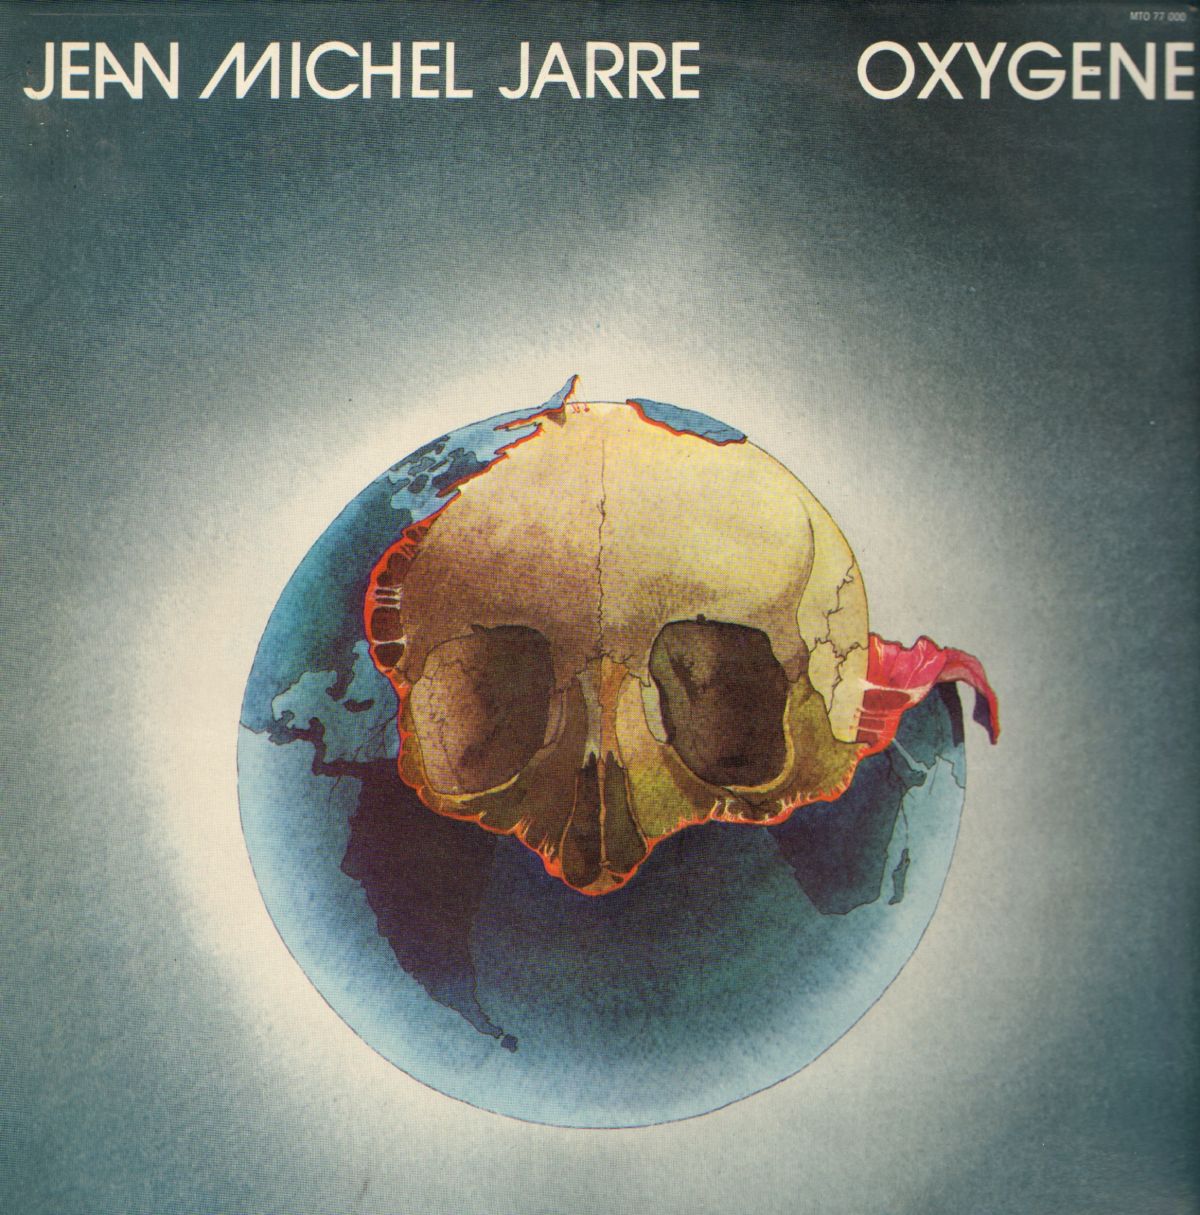 1976 Oxygene album